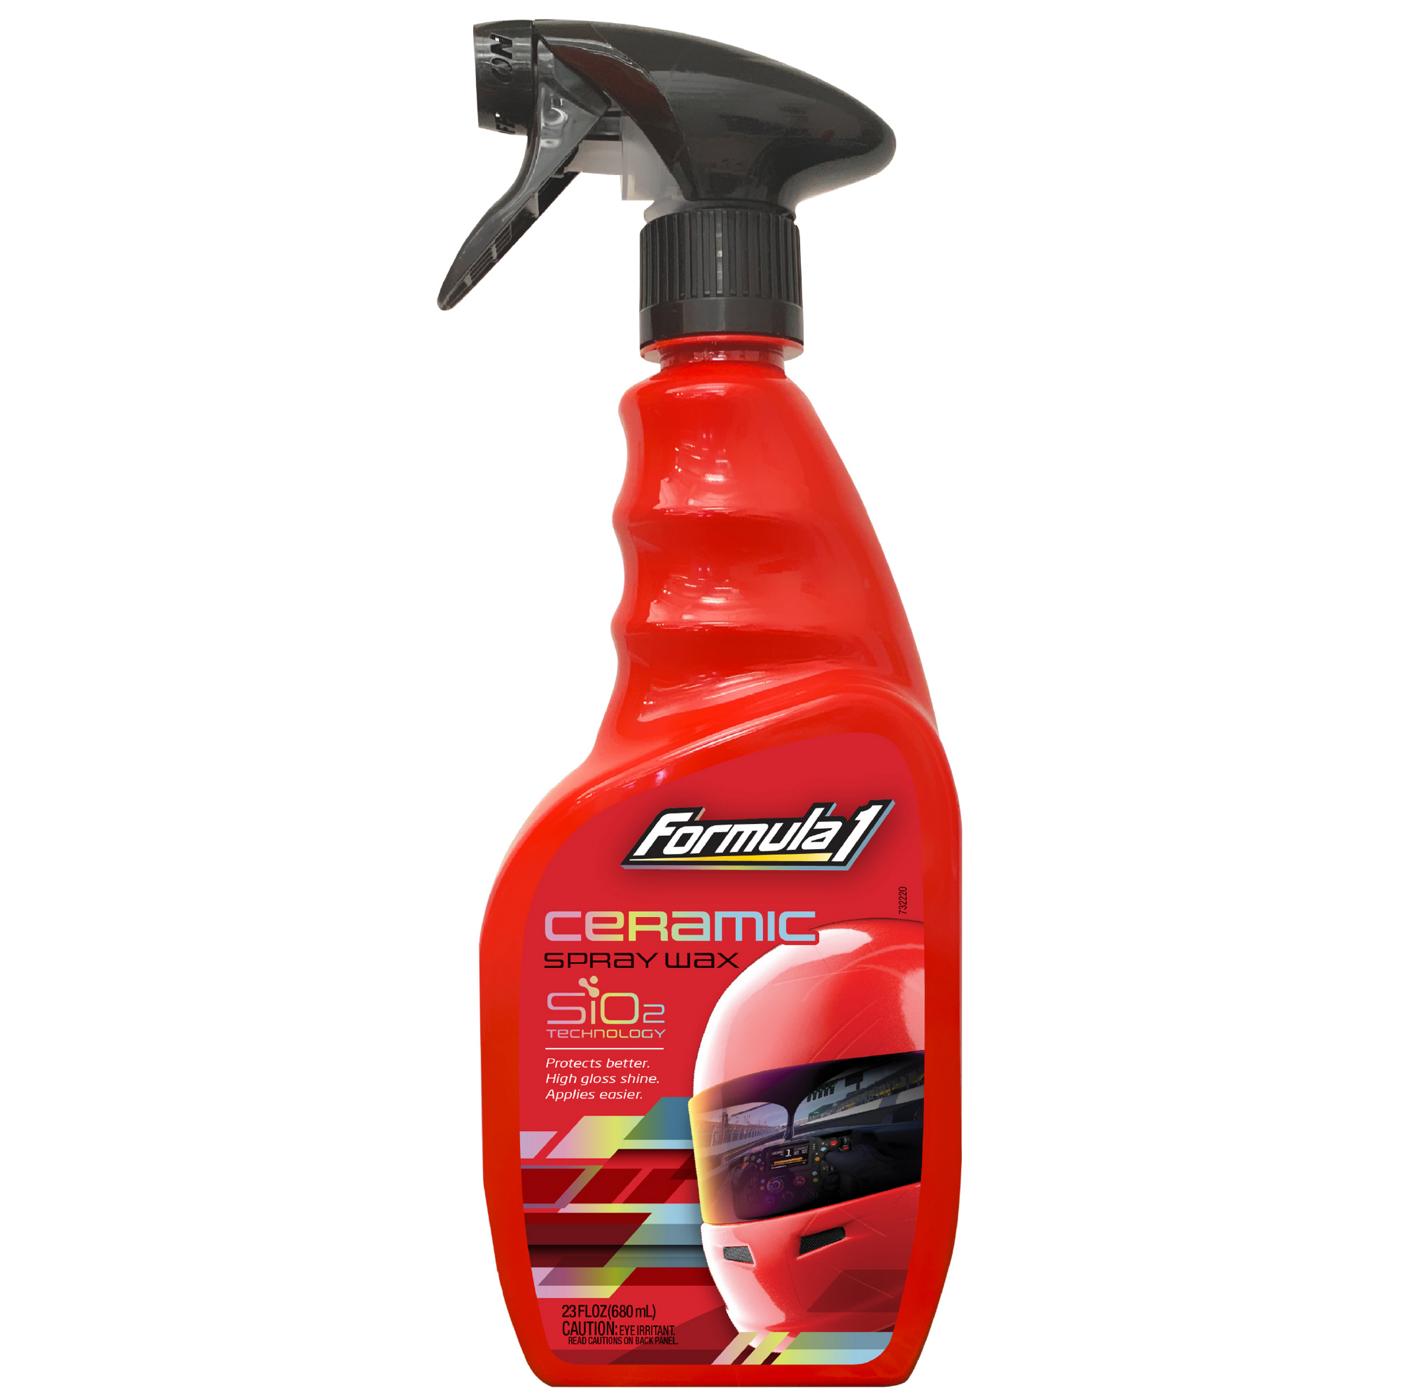 Formula 1 Ceramic Spray Wax; image 1 of 2